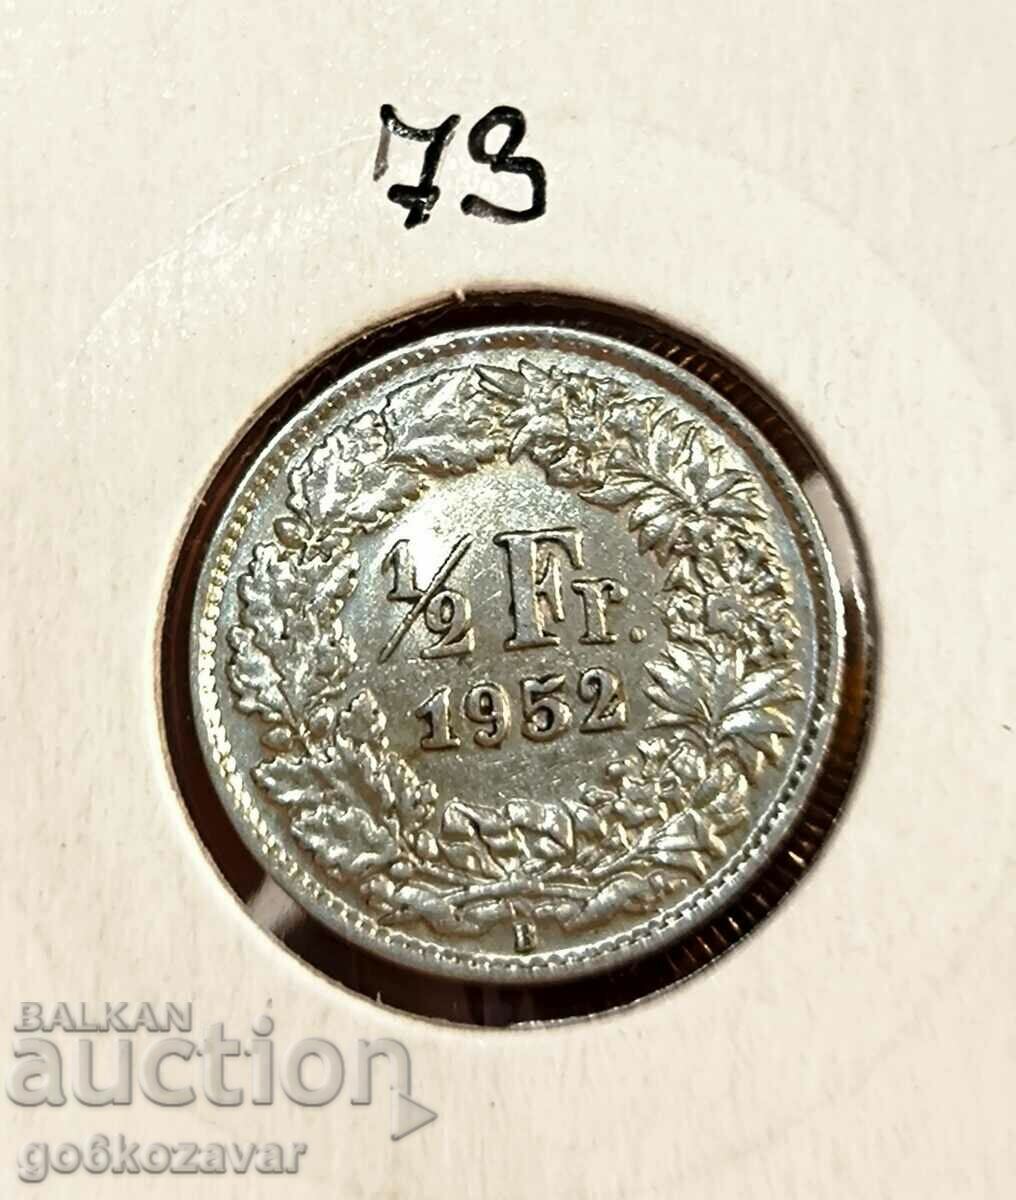 Switzerland 1/2 franc 1952 Silver !